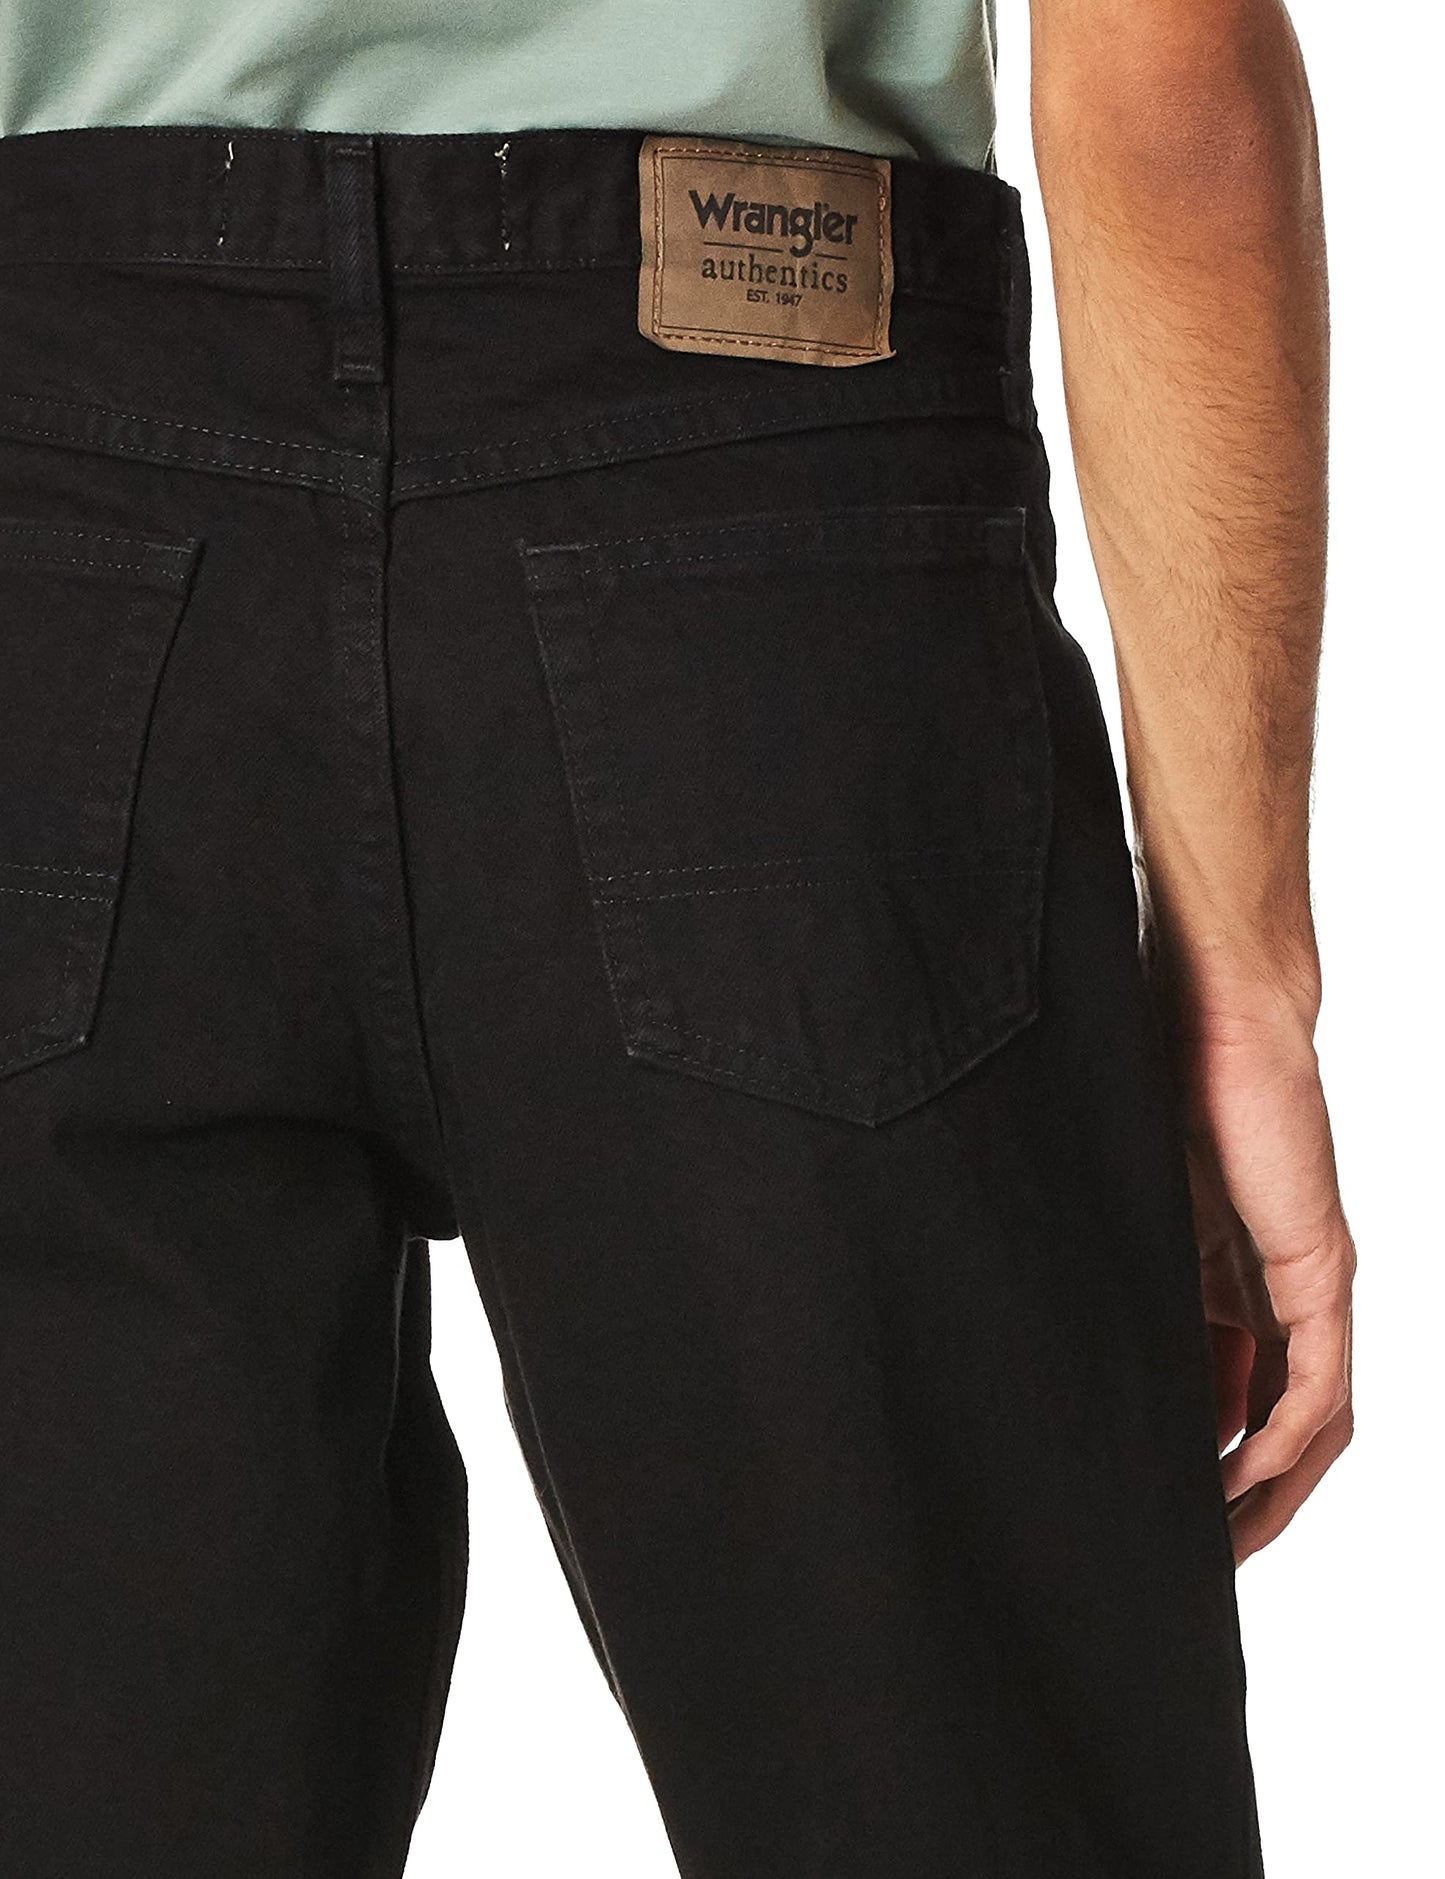 Wrangler Authentics Men's Classic 5-Pocket Relaxed Fit Cotton Jean, Black, 38W X 28L